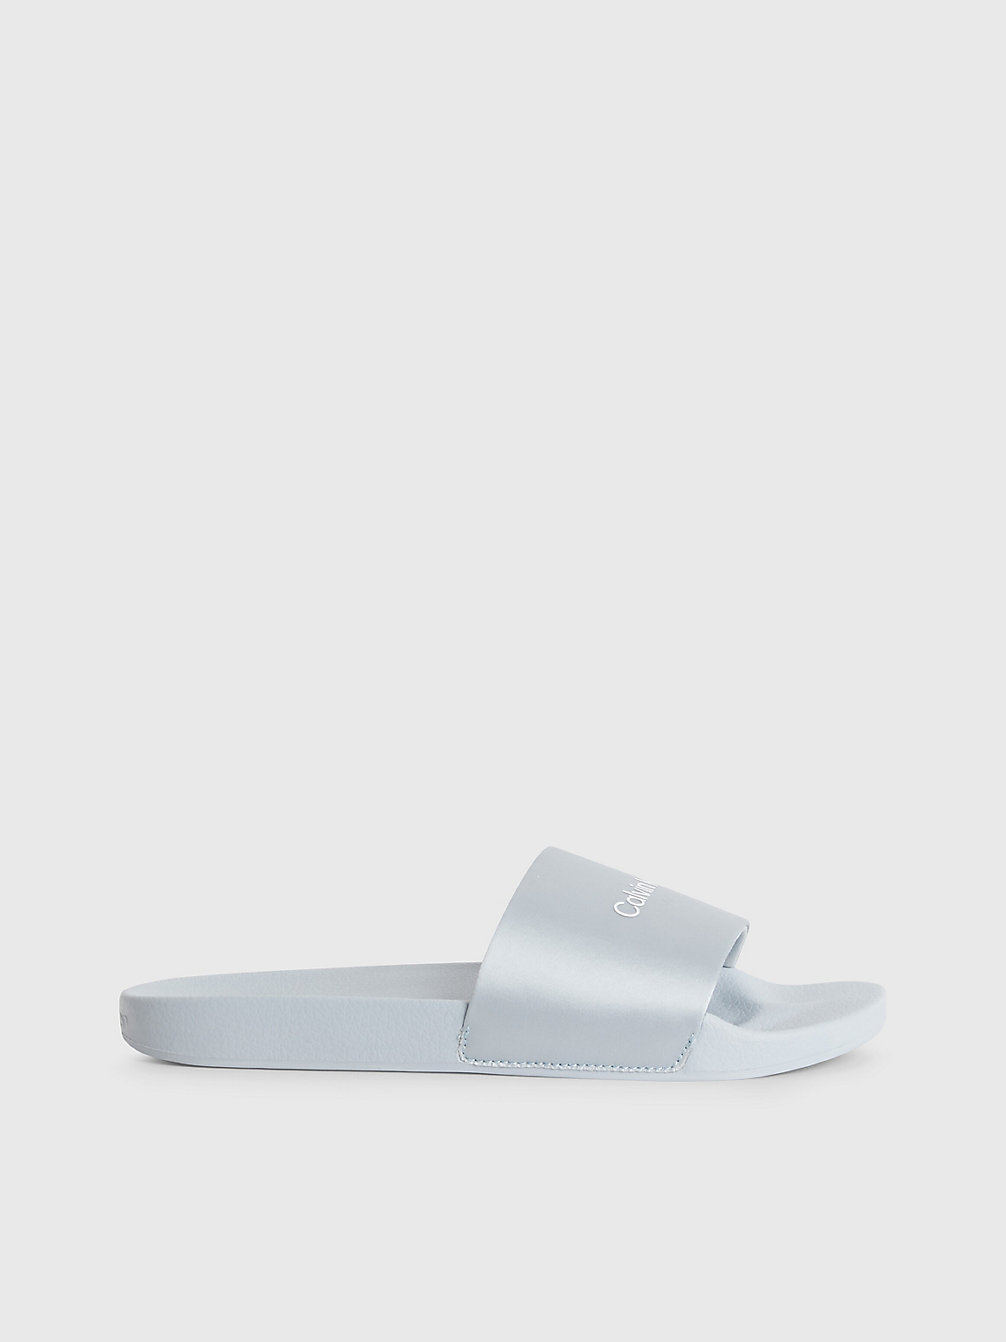 PEARL BLUE / WHITE > Satin-Slippers Aus Recyceltem Material > undefined Damen - Calvin Klein